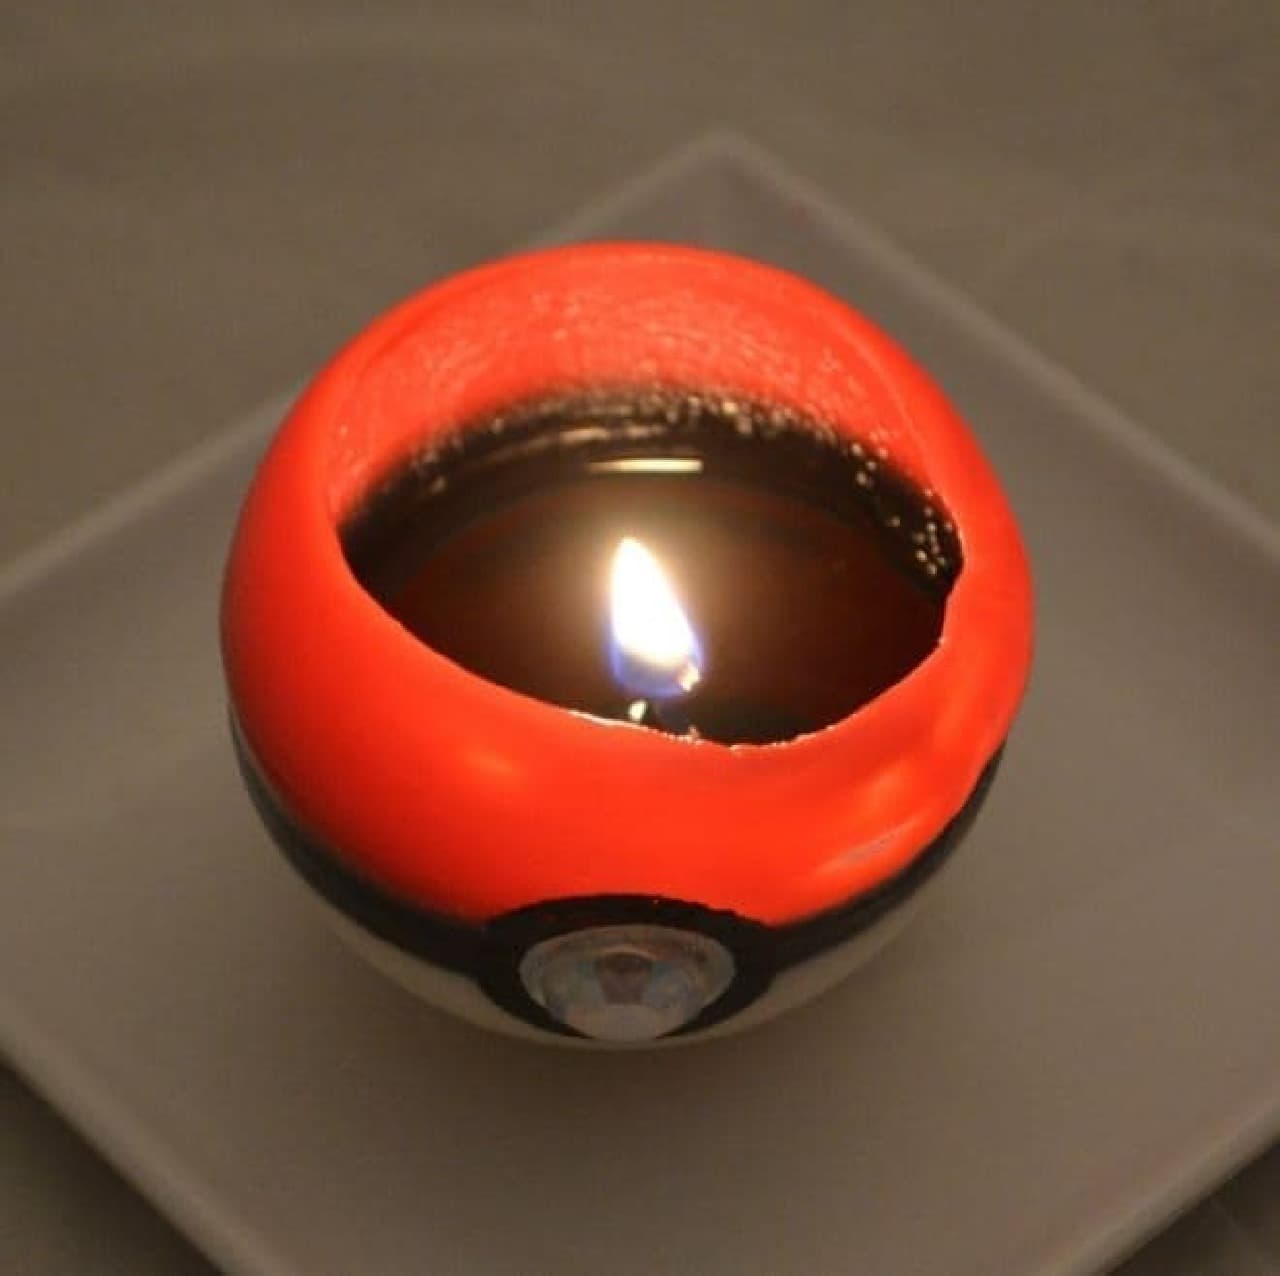 Candle "Poke Ball" that imitates a Pokemon monster ball